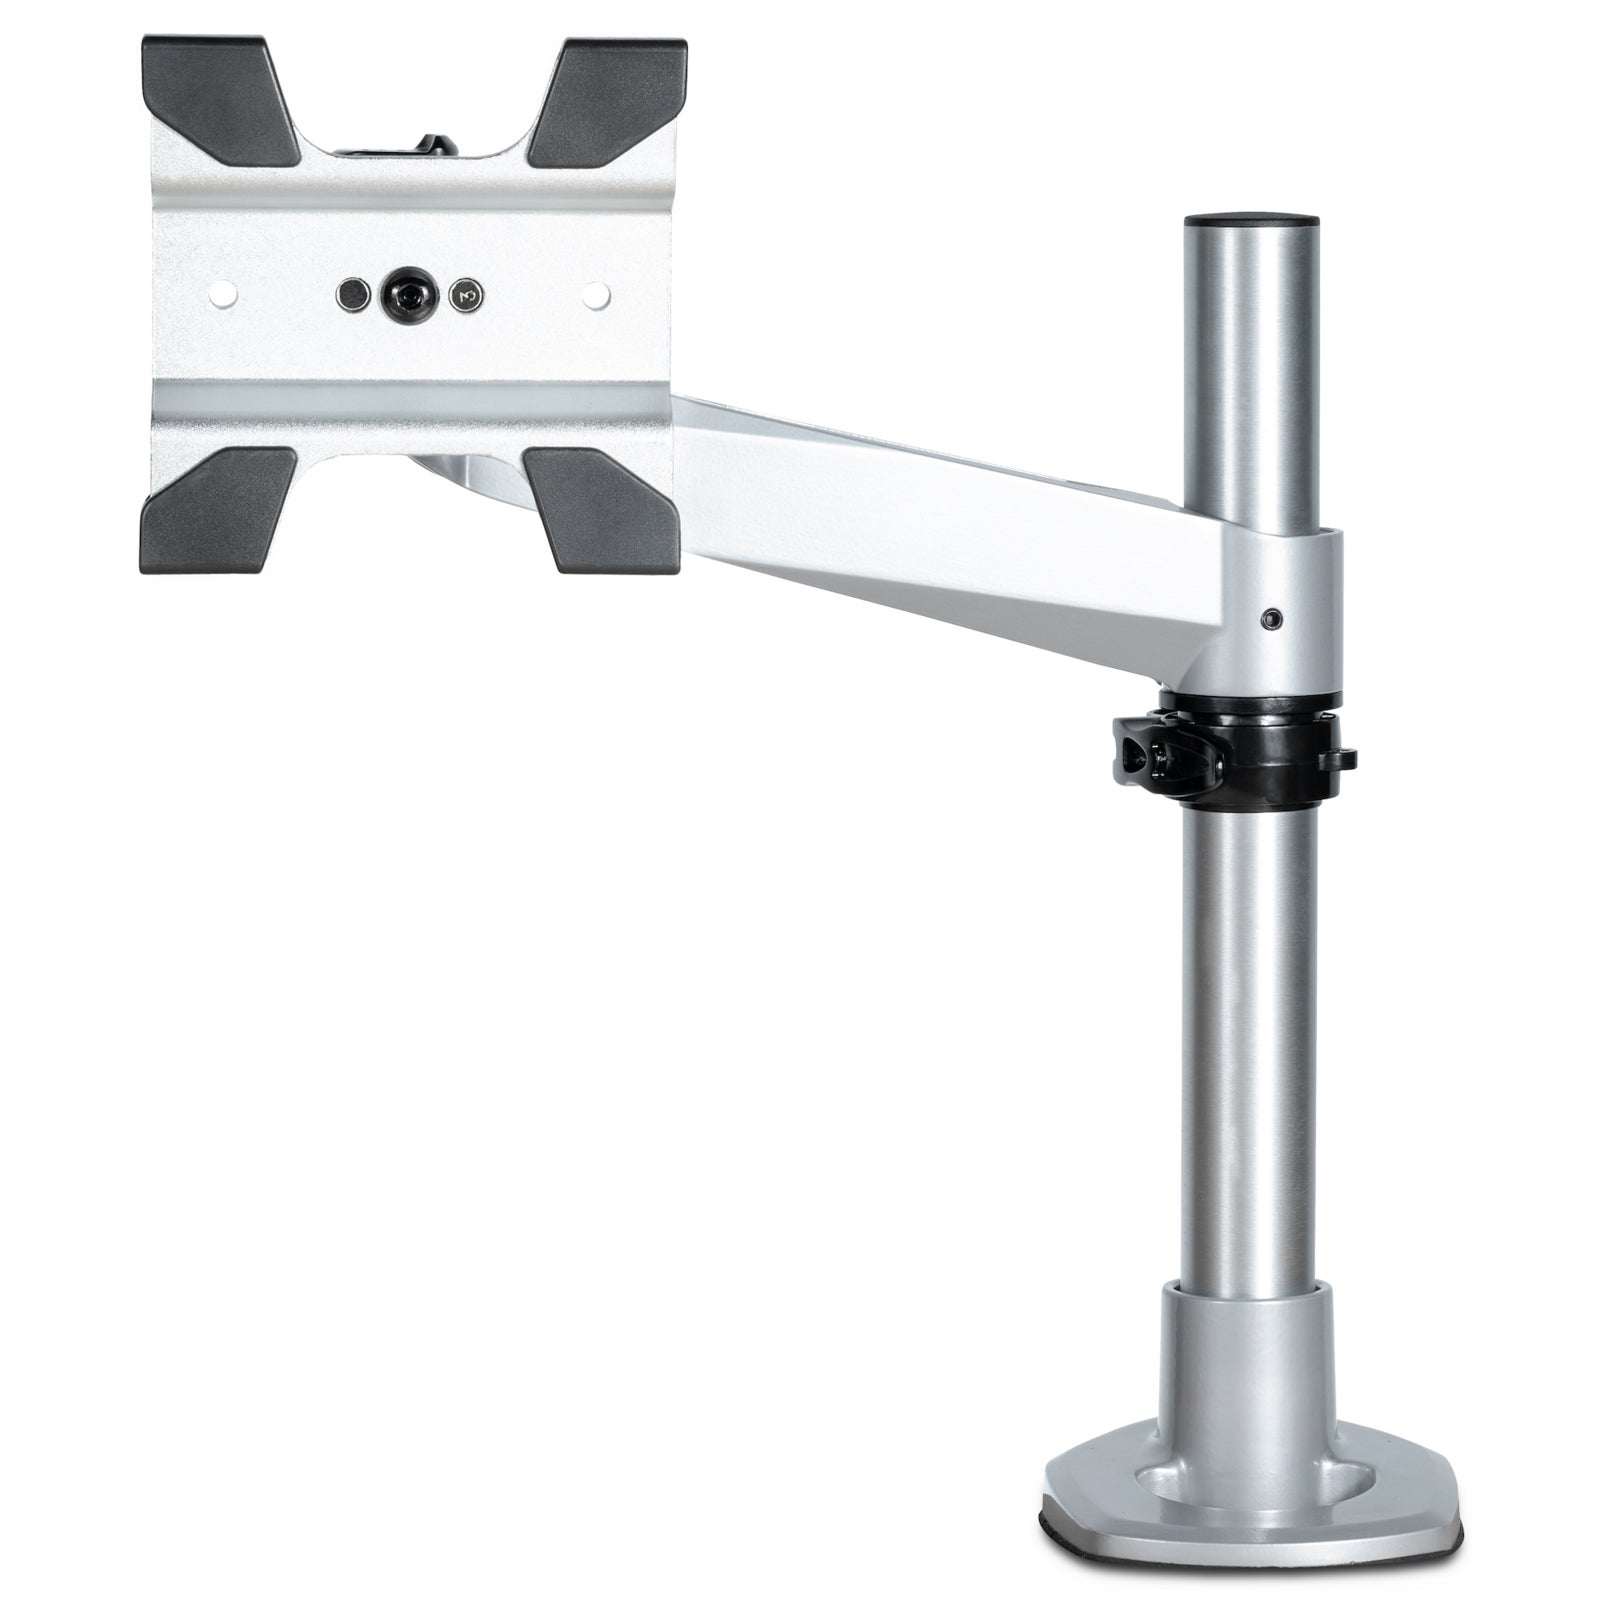 Star Tech Single Desk Mount Articulating Monitor Arm for 14kg Display VESA/iMac